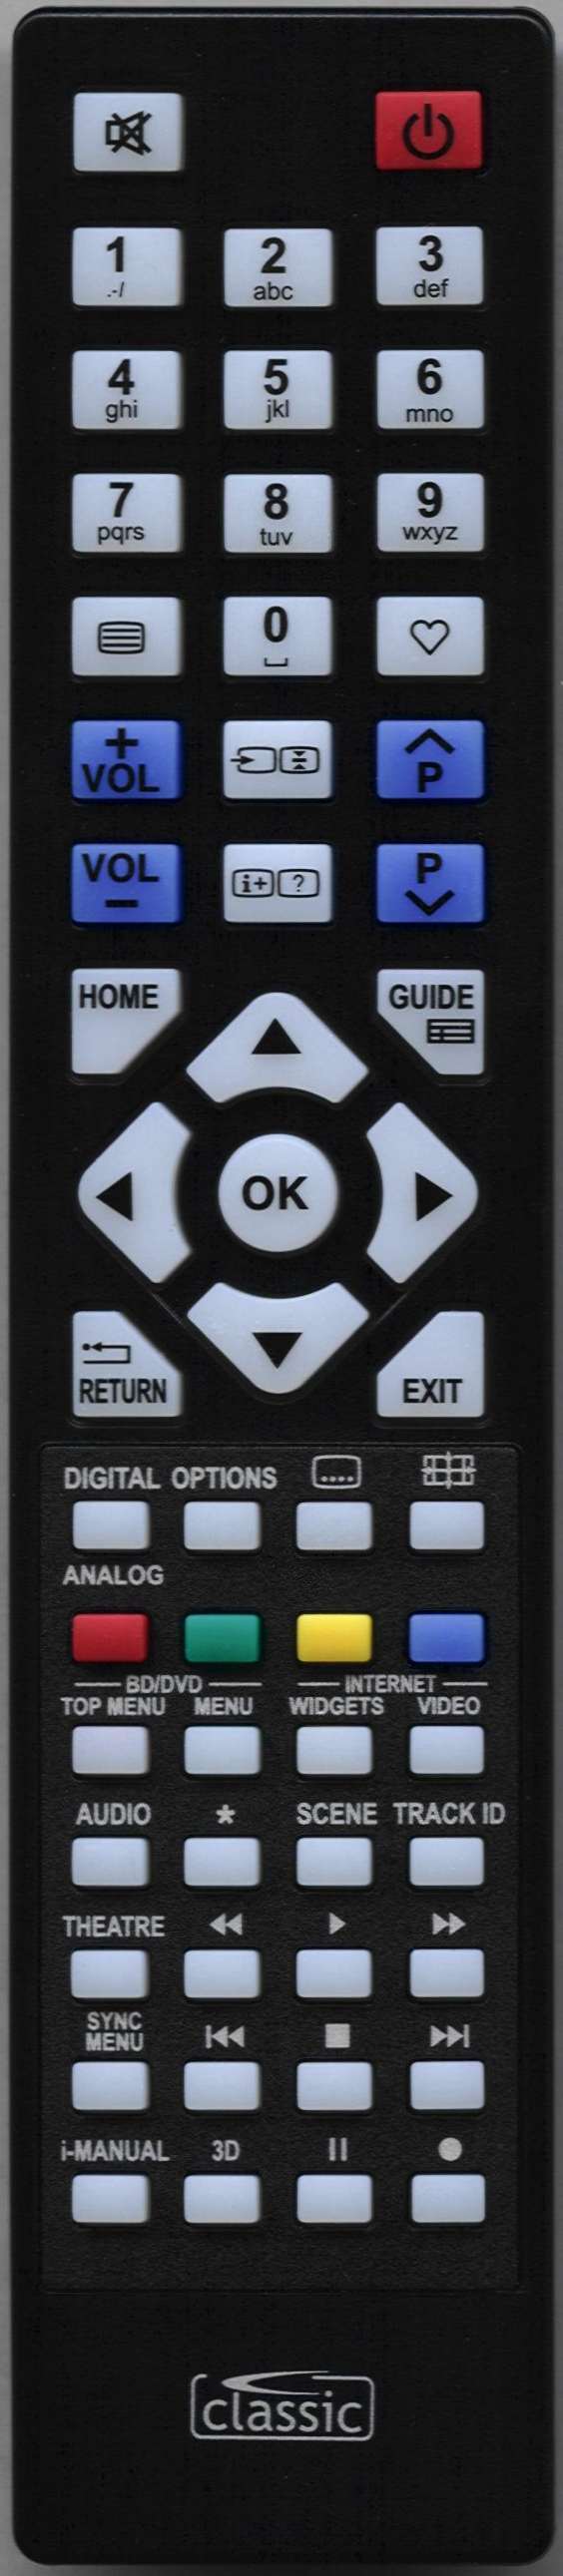 SONY KDL-40BX420 Remote Control Alternative